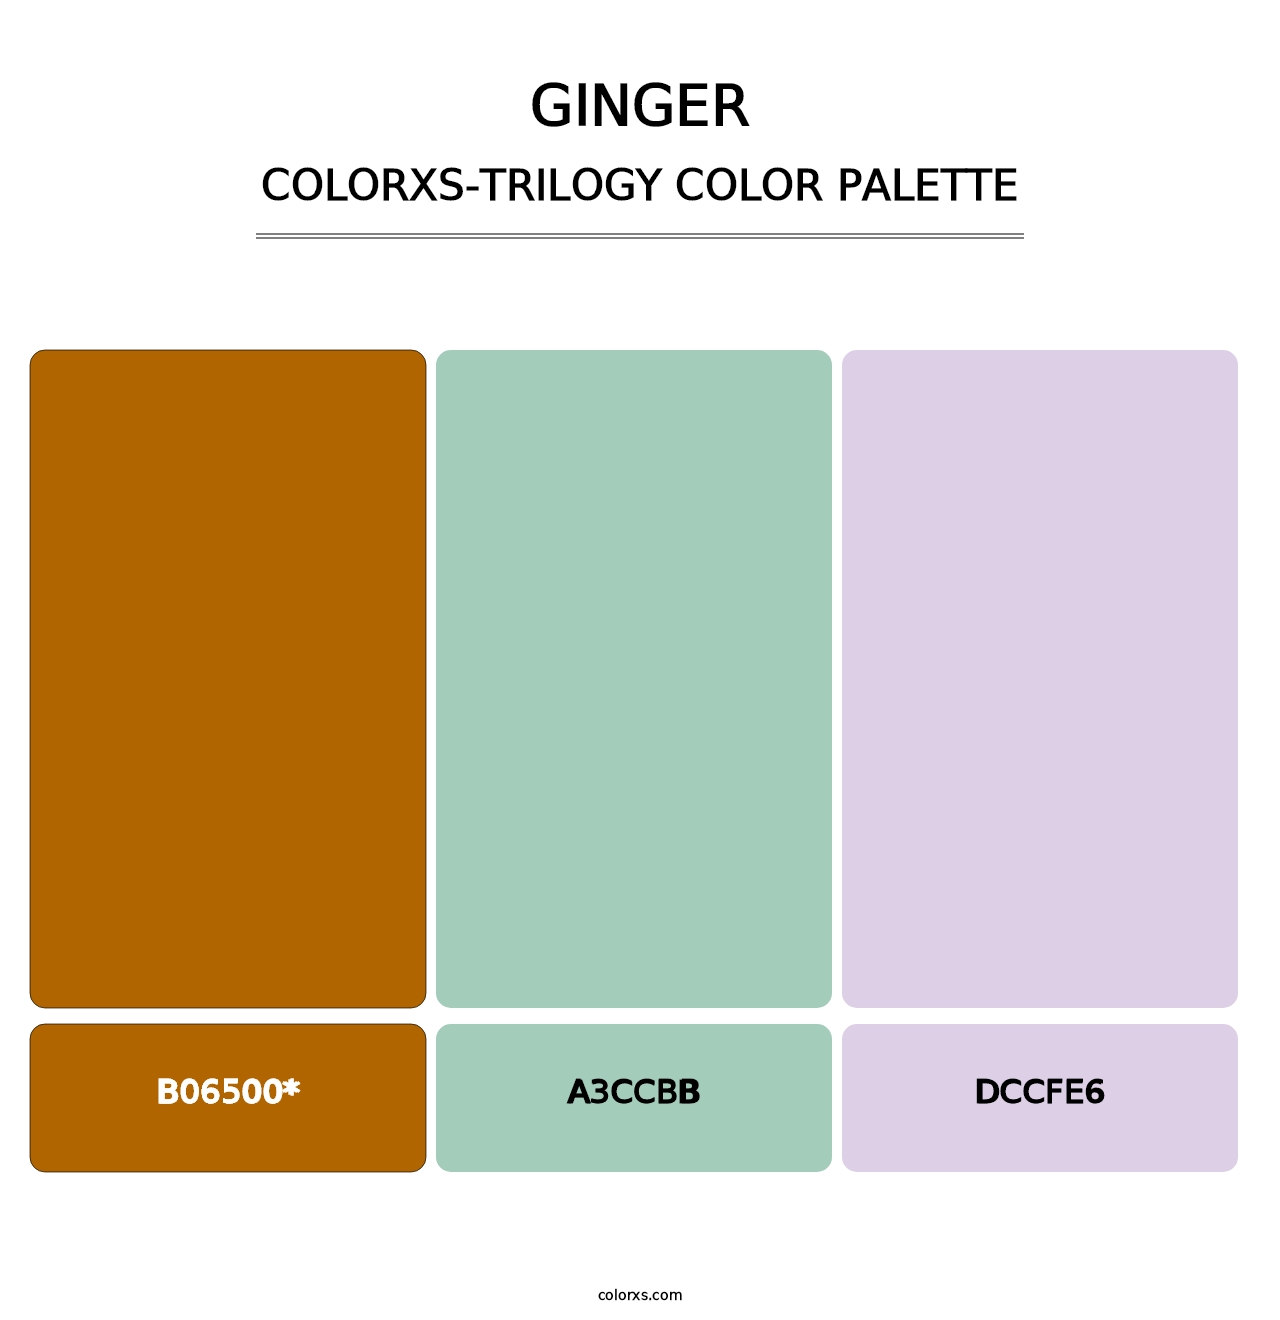 Ginger - Colorxs Trilogy Palette